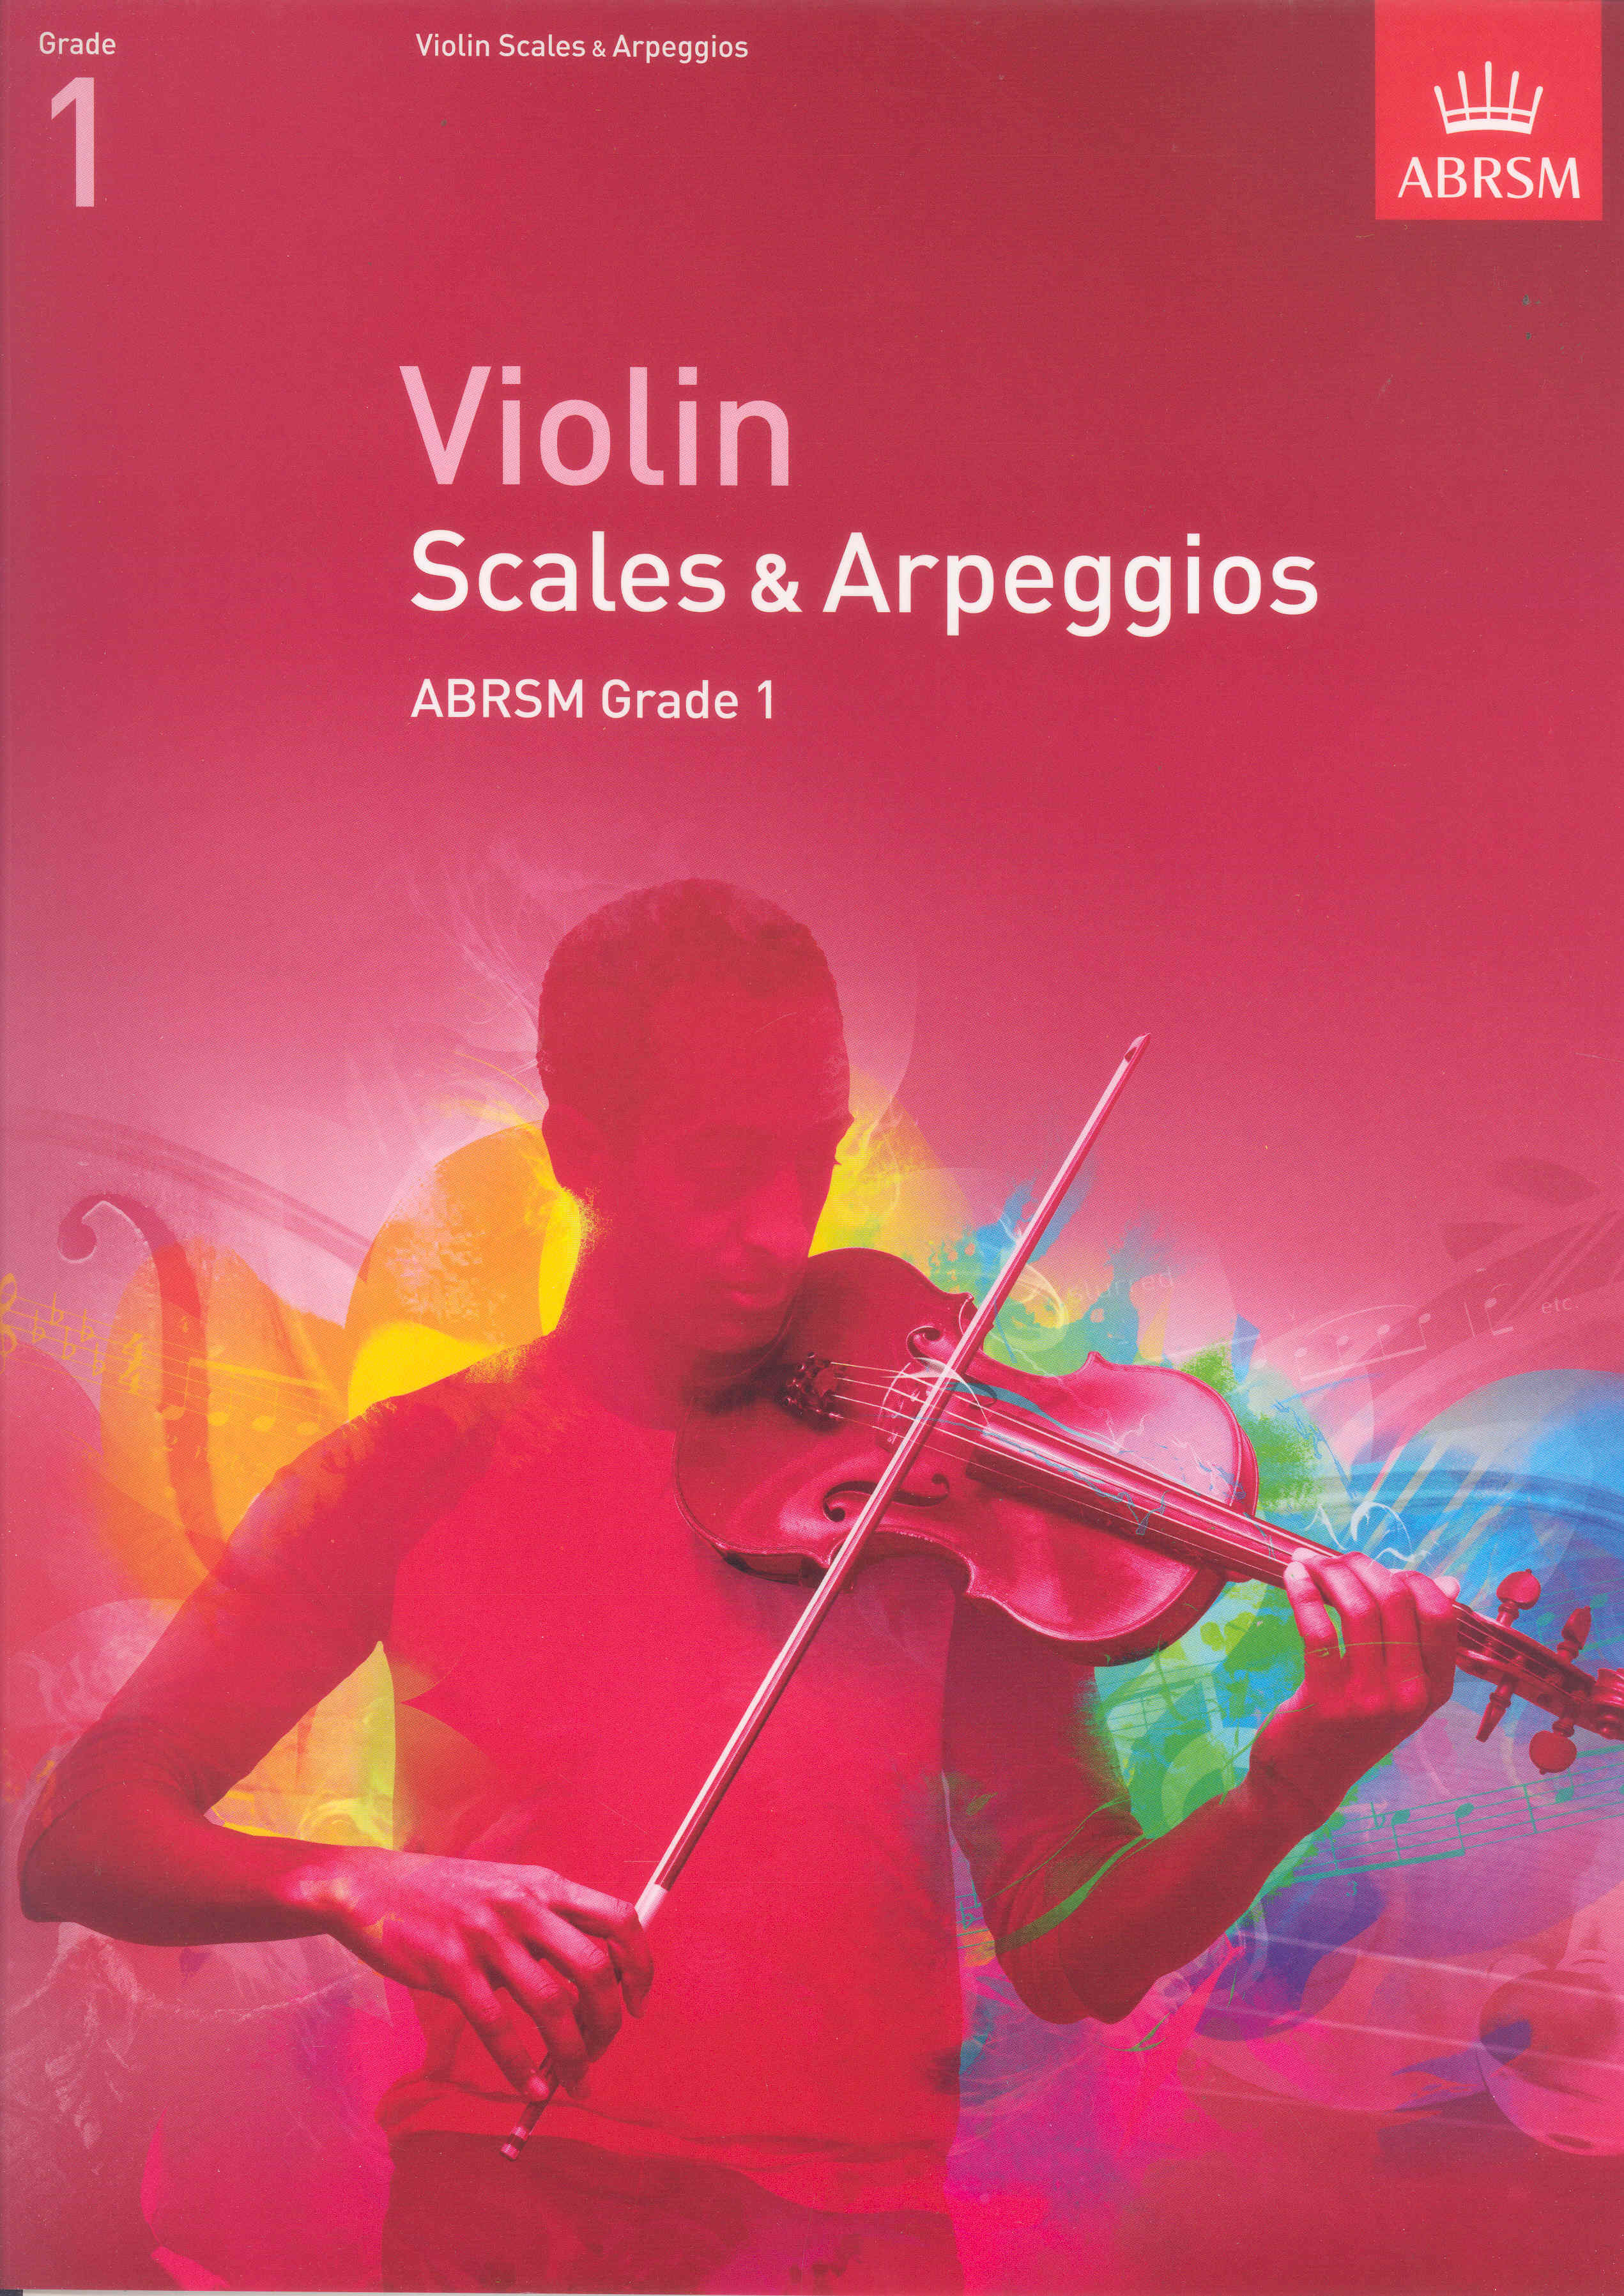 Violin Scales & Arpeggios Grade 1 Abrsm Sheet Music Songbook